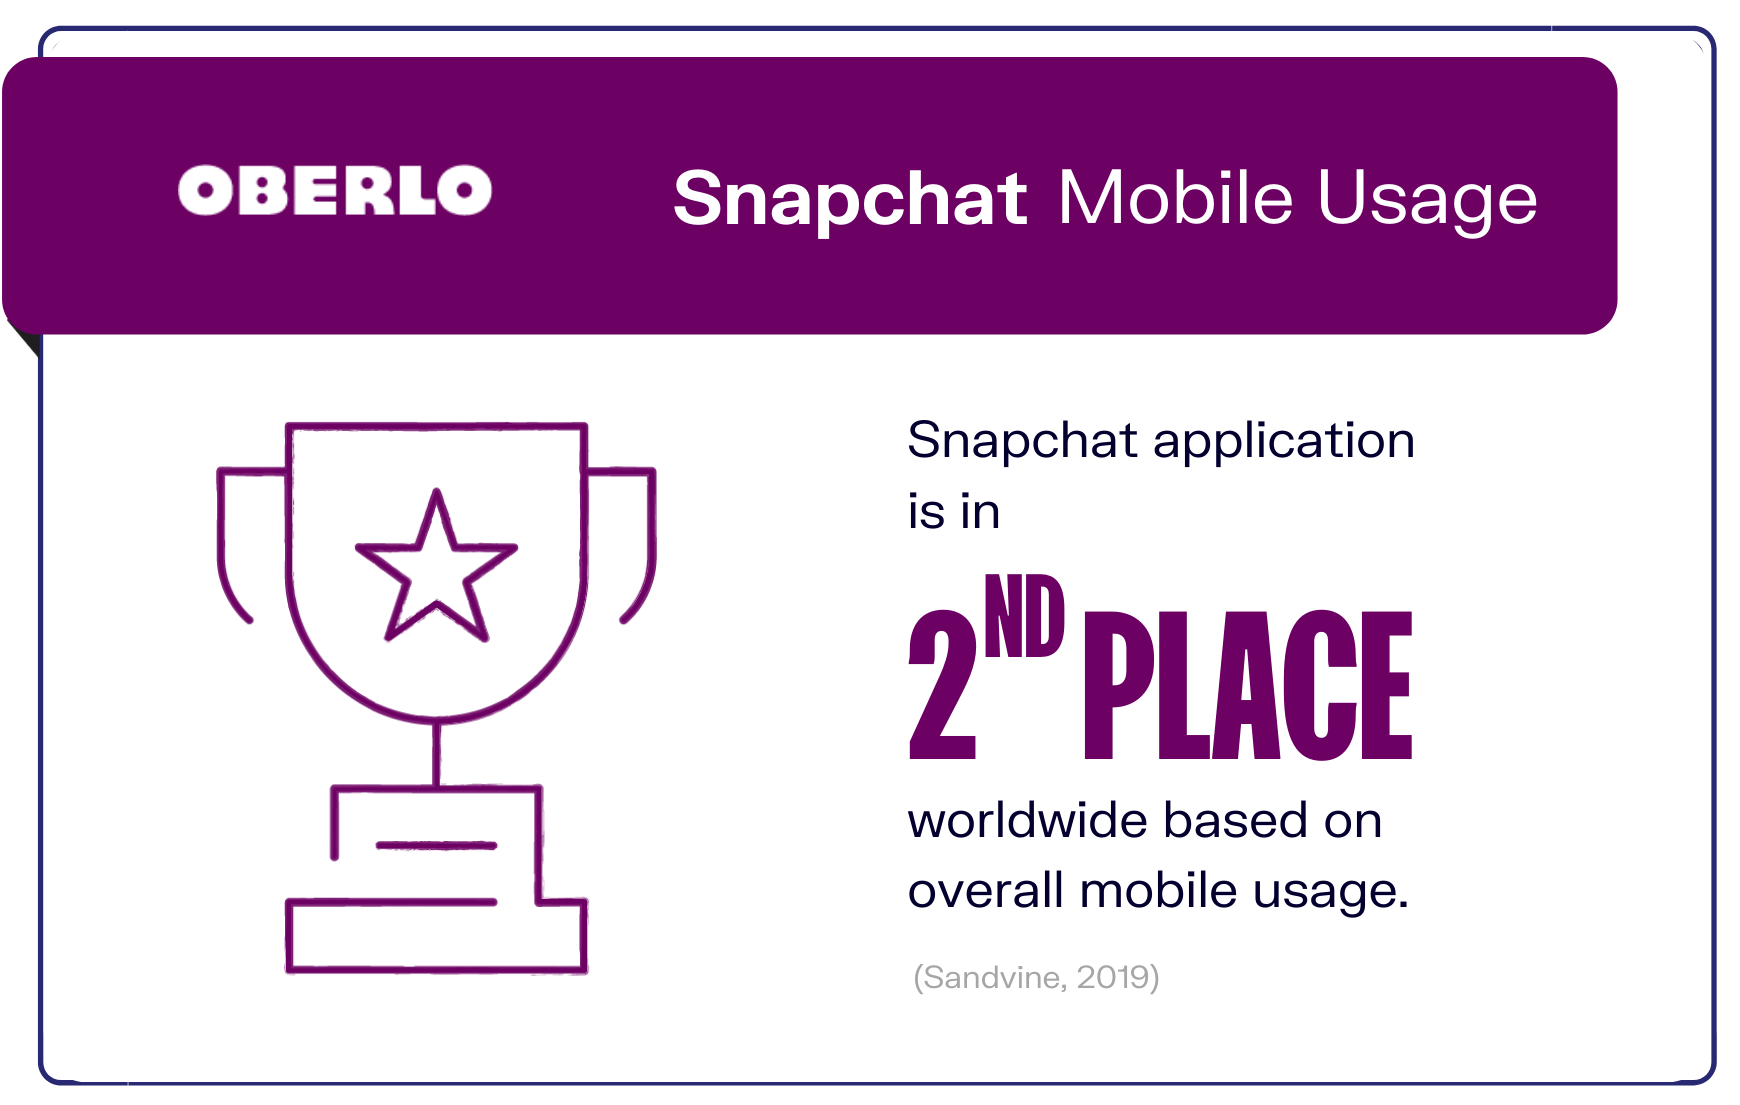 Snapchat Mobile Usage graphic